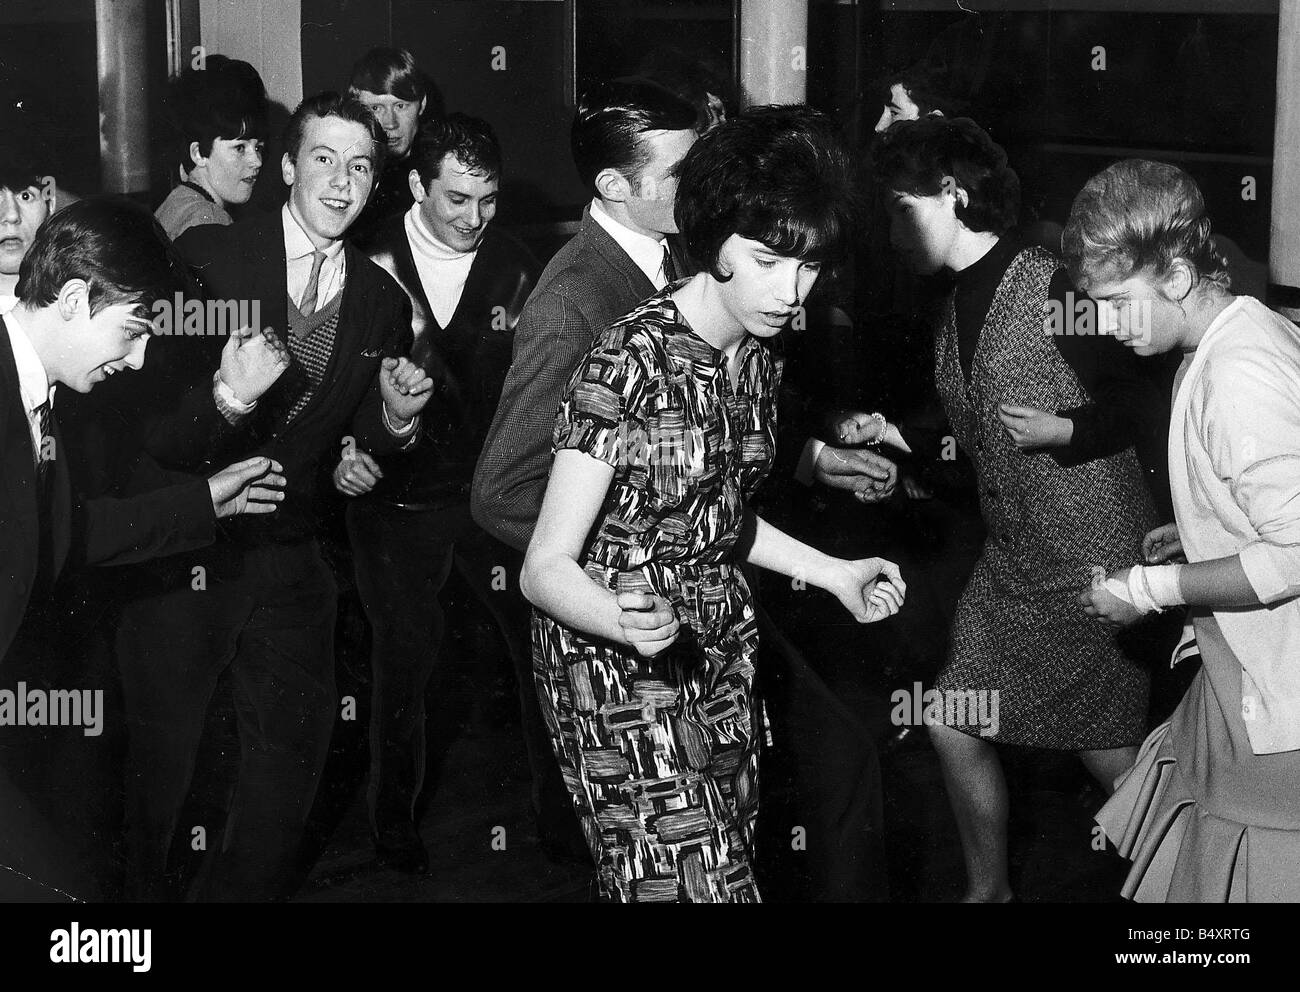 Beatles Fan Club in stile anni sessanta dancing Foto Stock